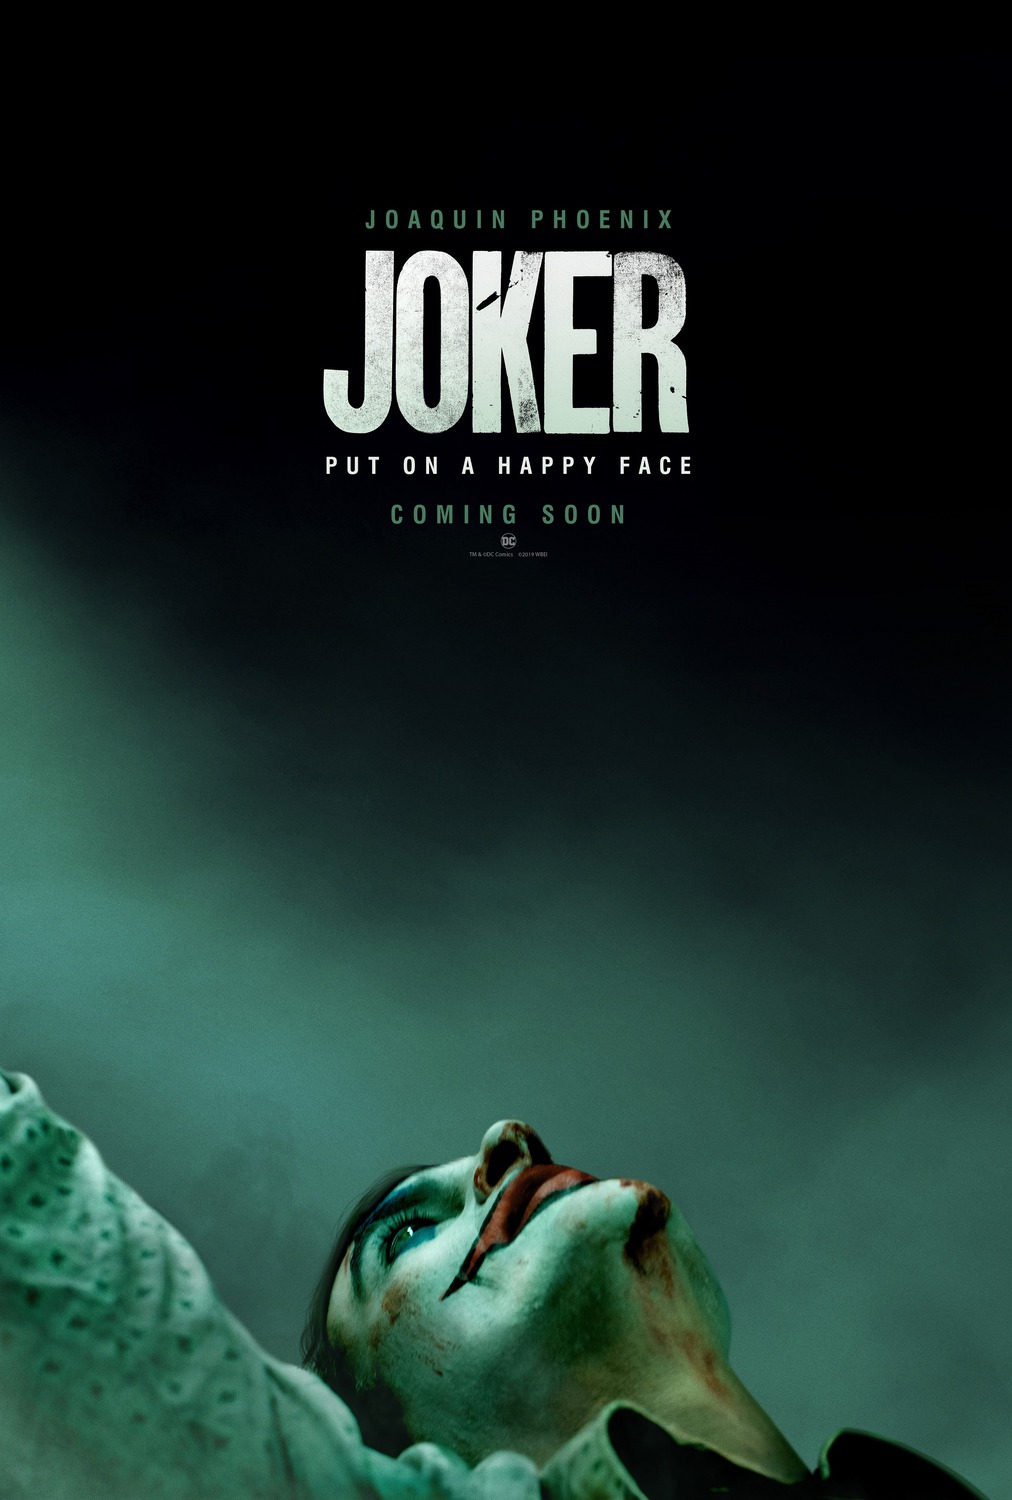 Joker first look review Venice Film Festival 2019: Joaquin Phoenix puts on a happy face